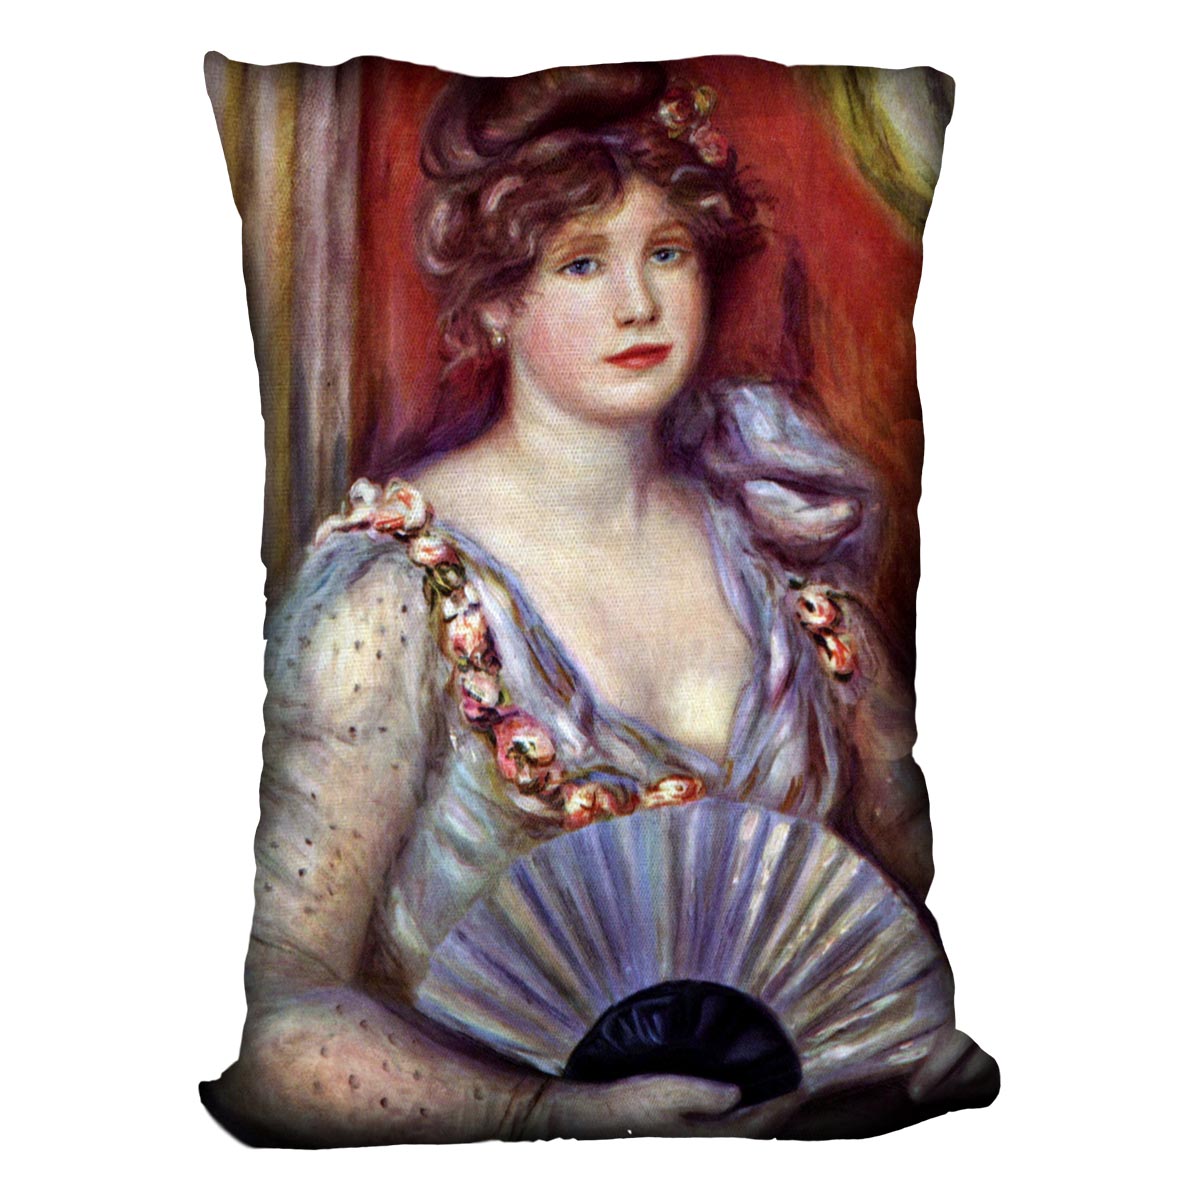 Lady with fan by Renoir Cushion